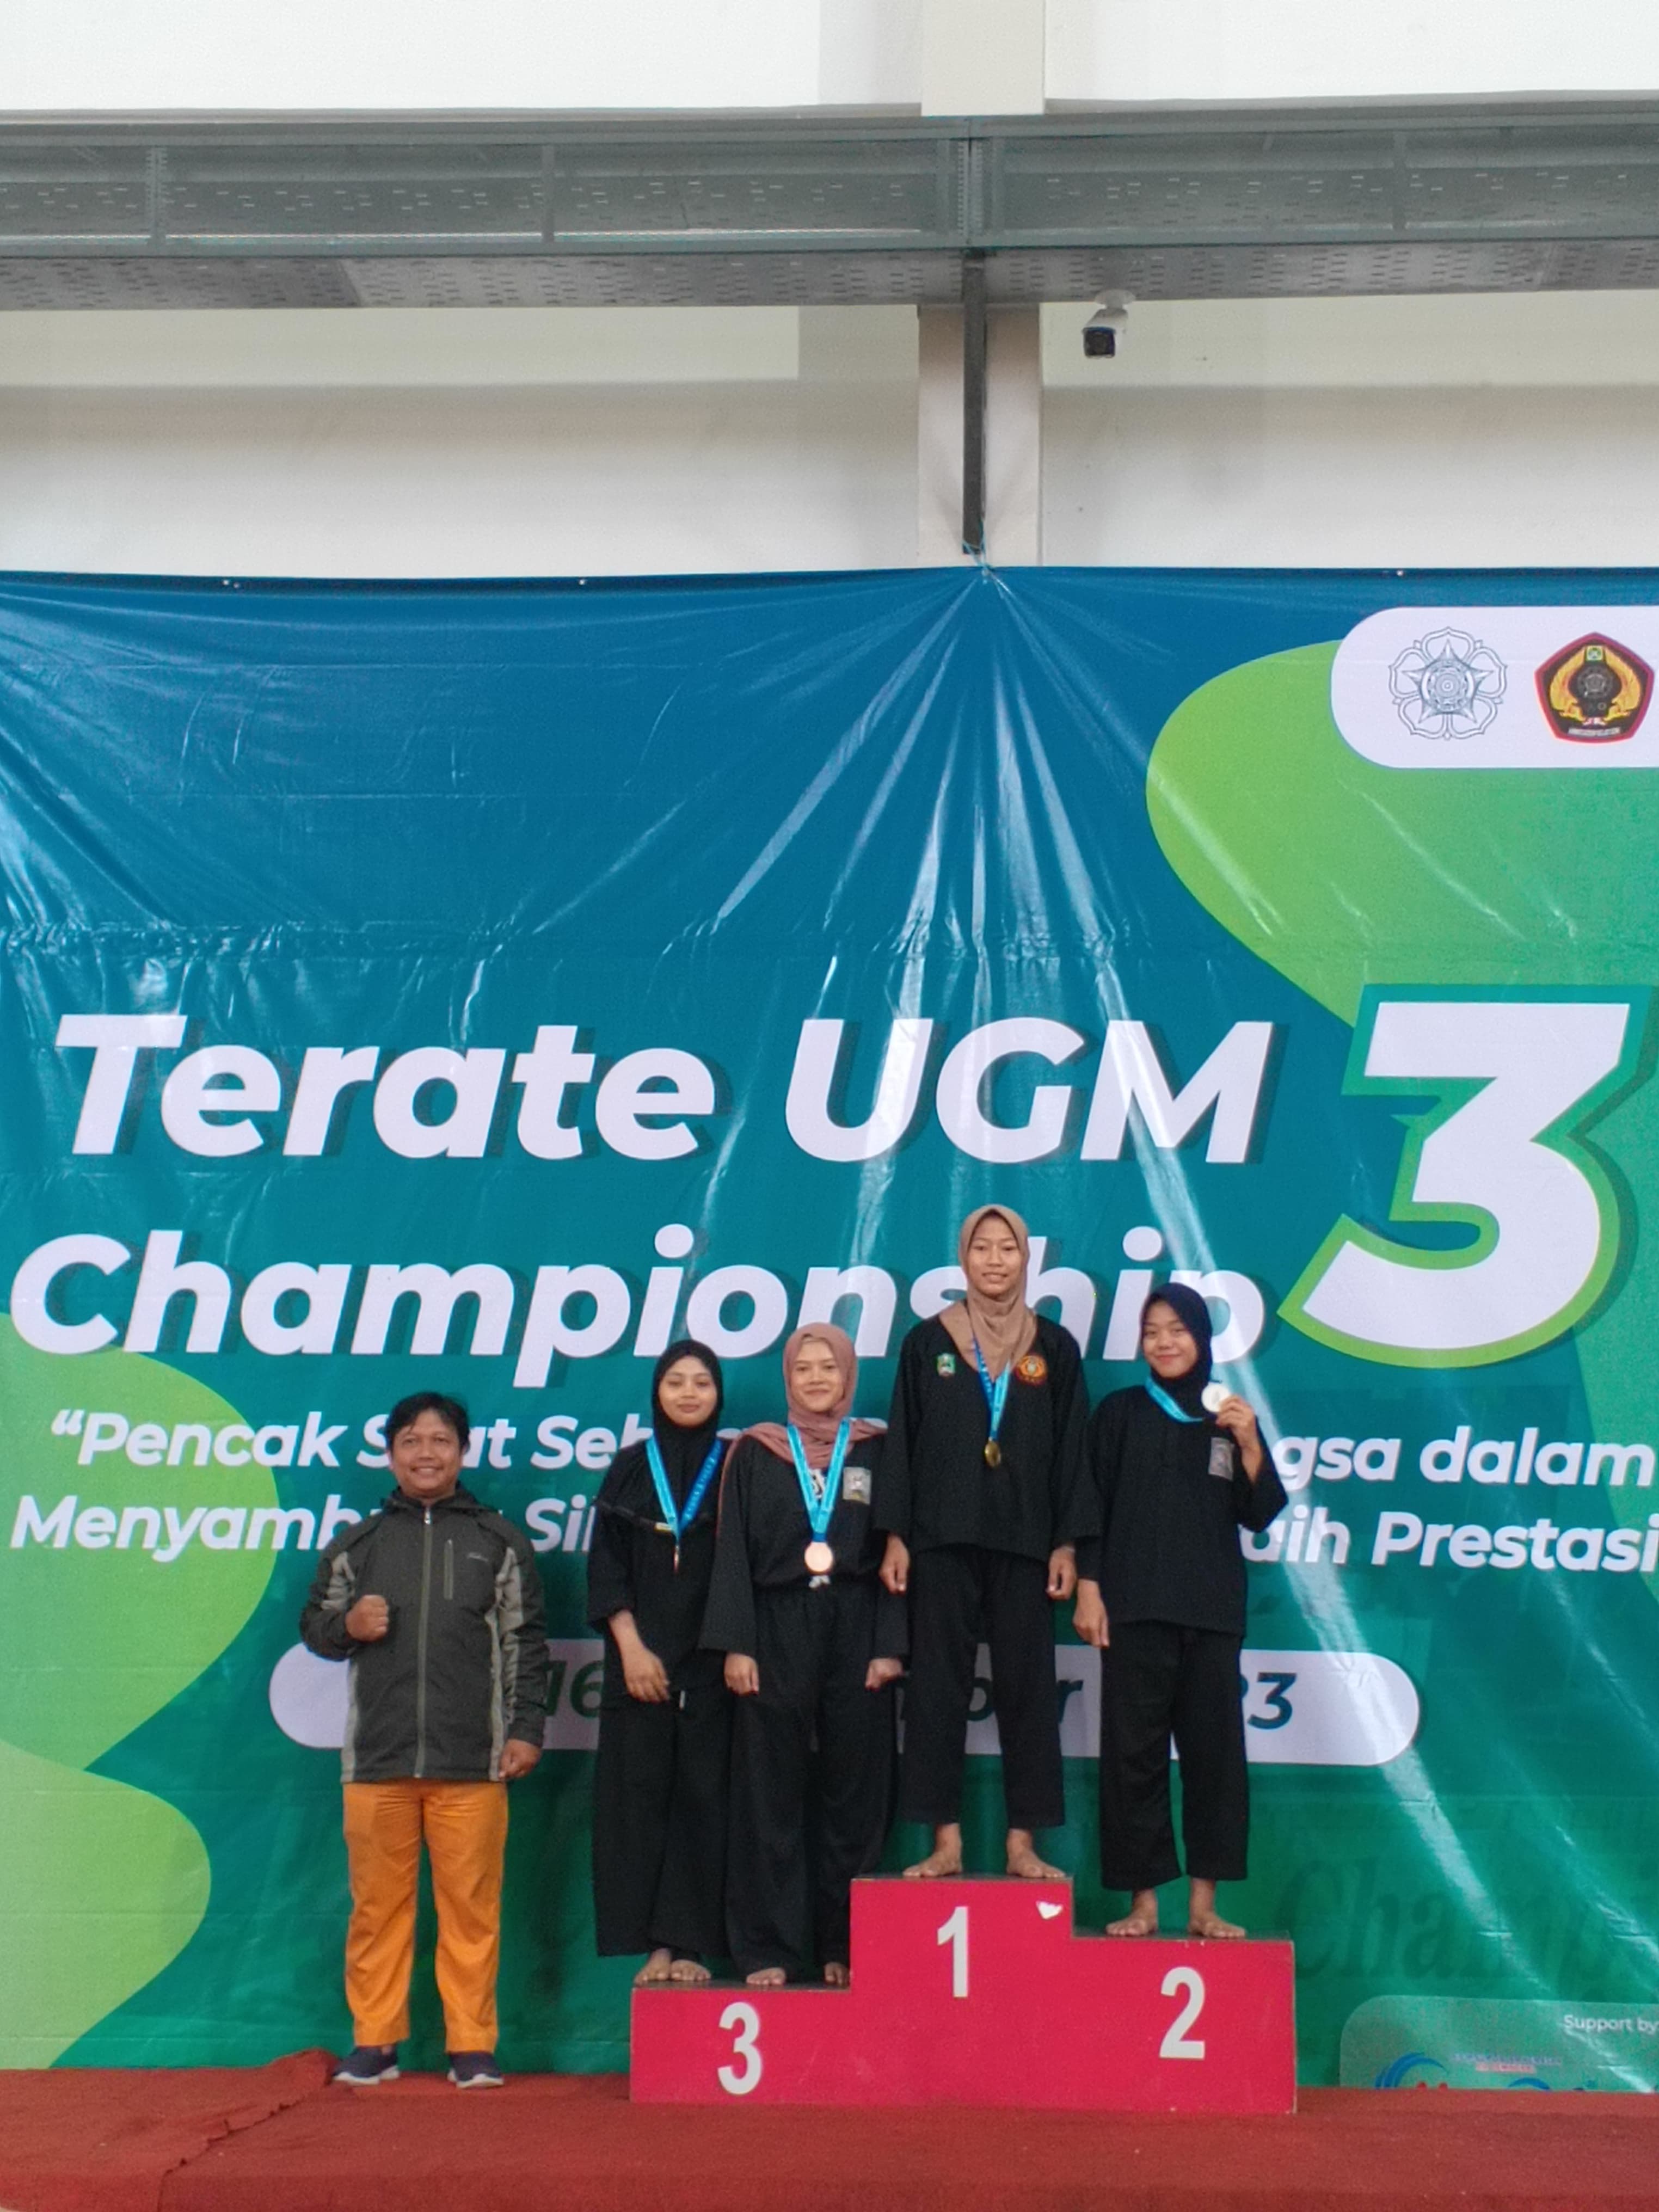 Foto Terate UGM Championship